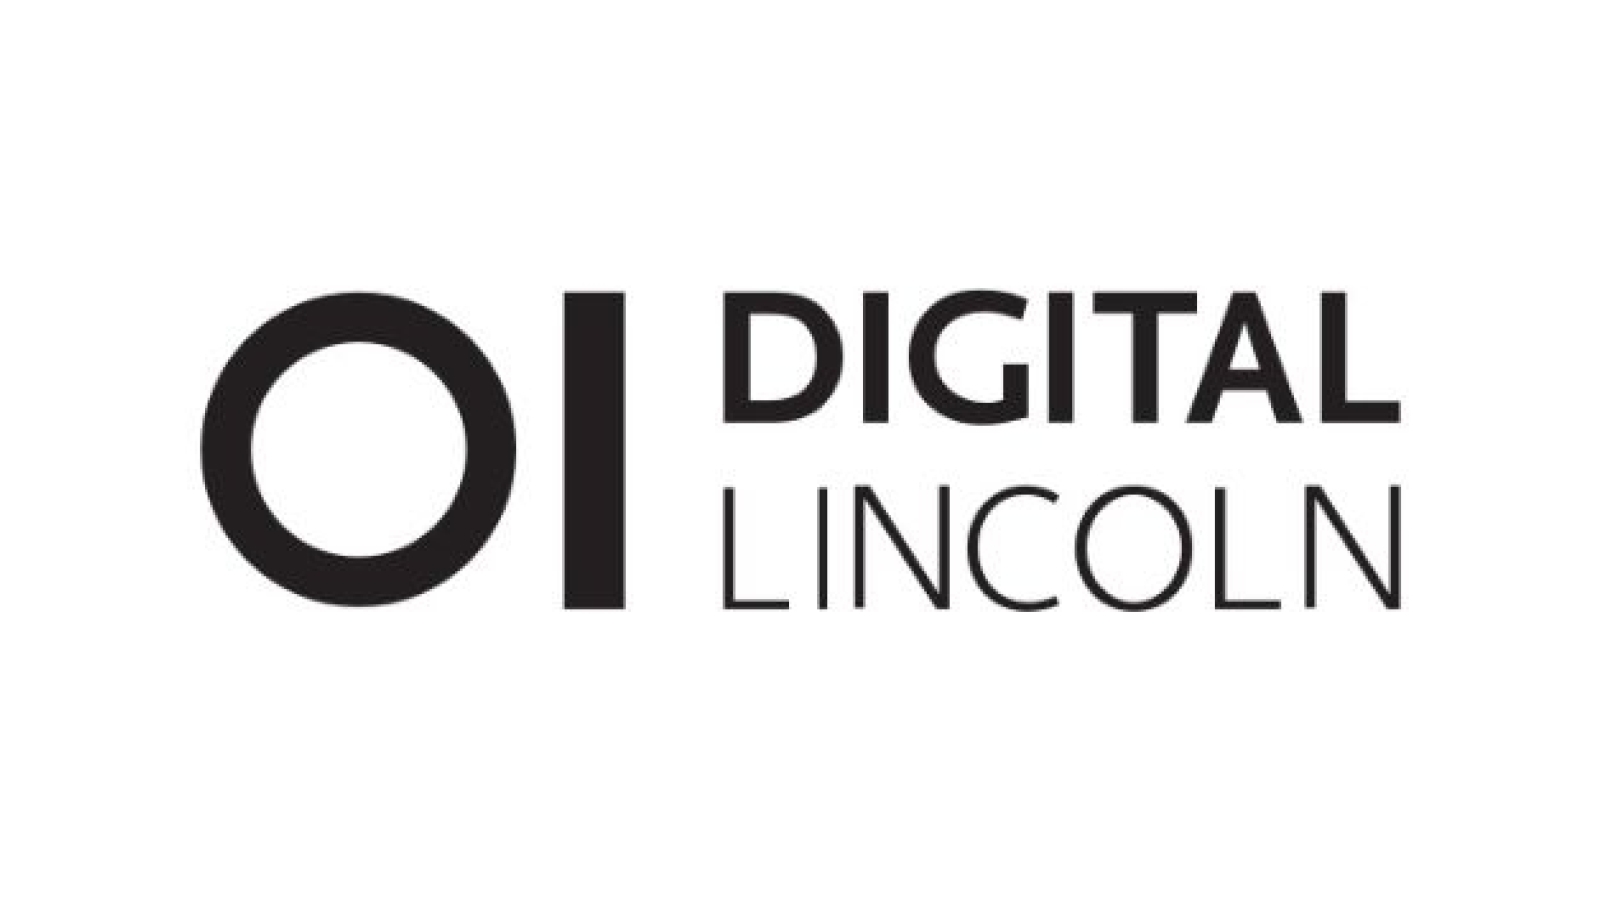 Digital lincoln logo